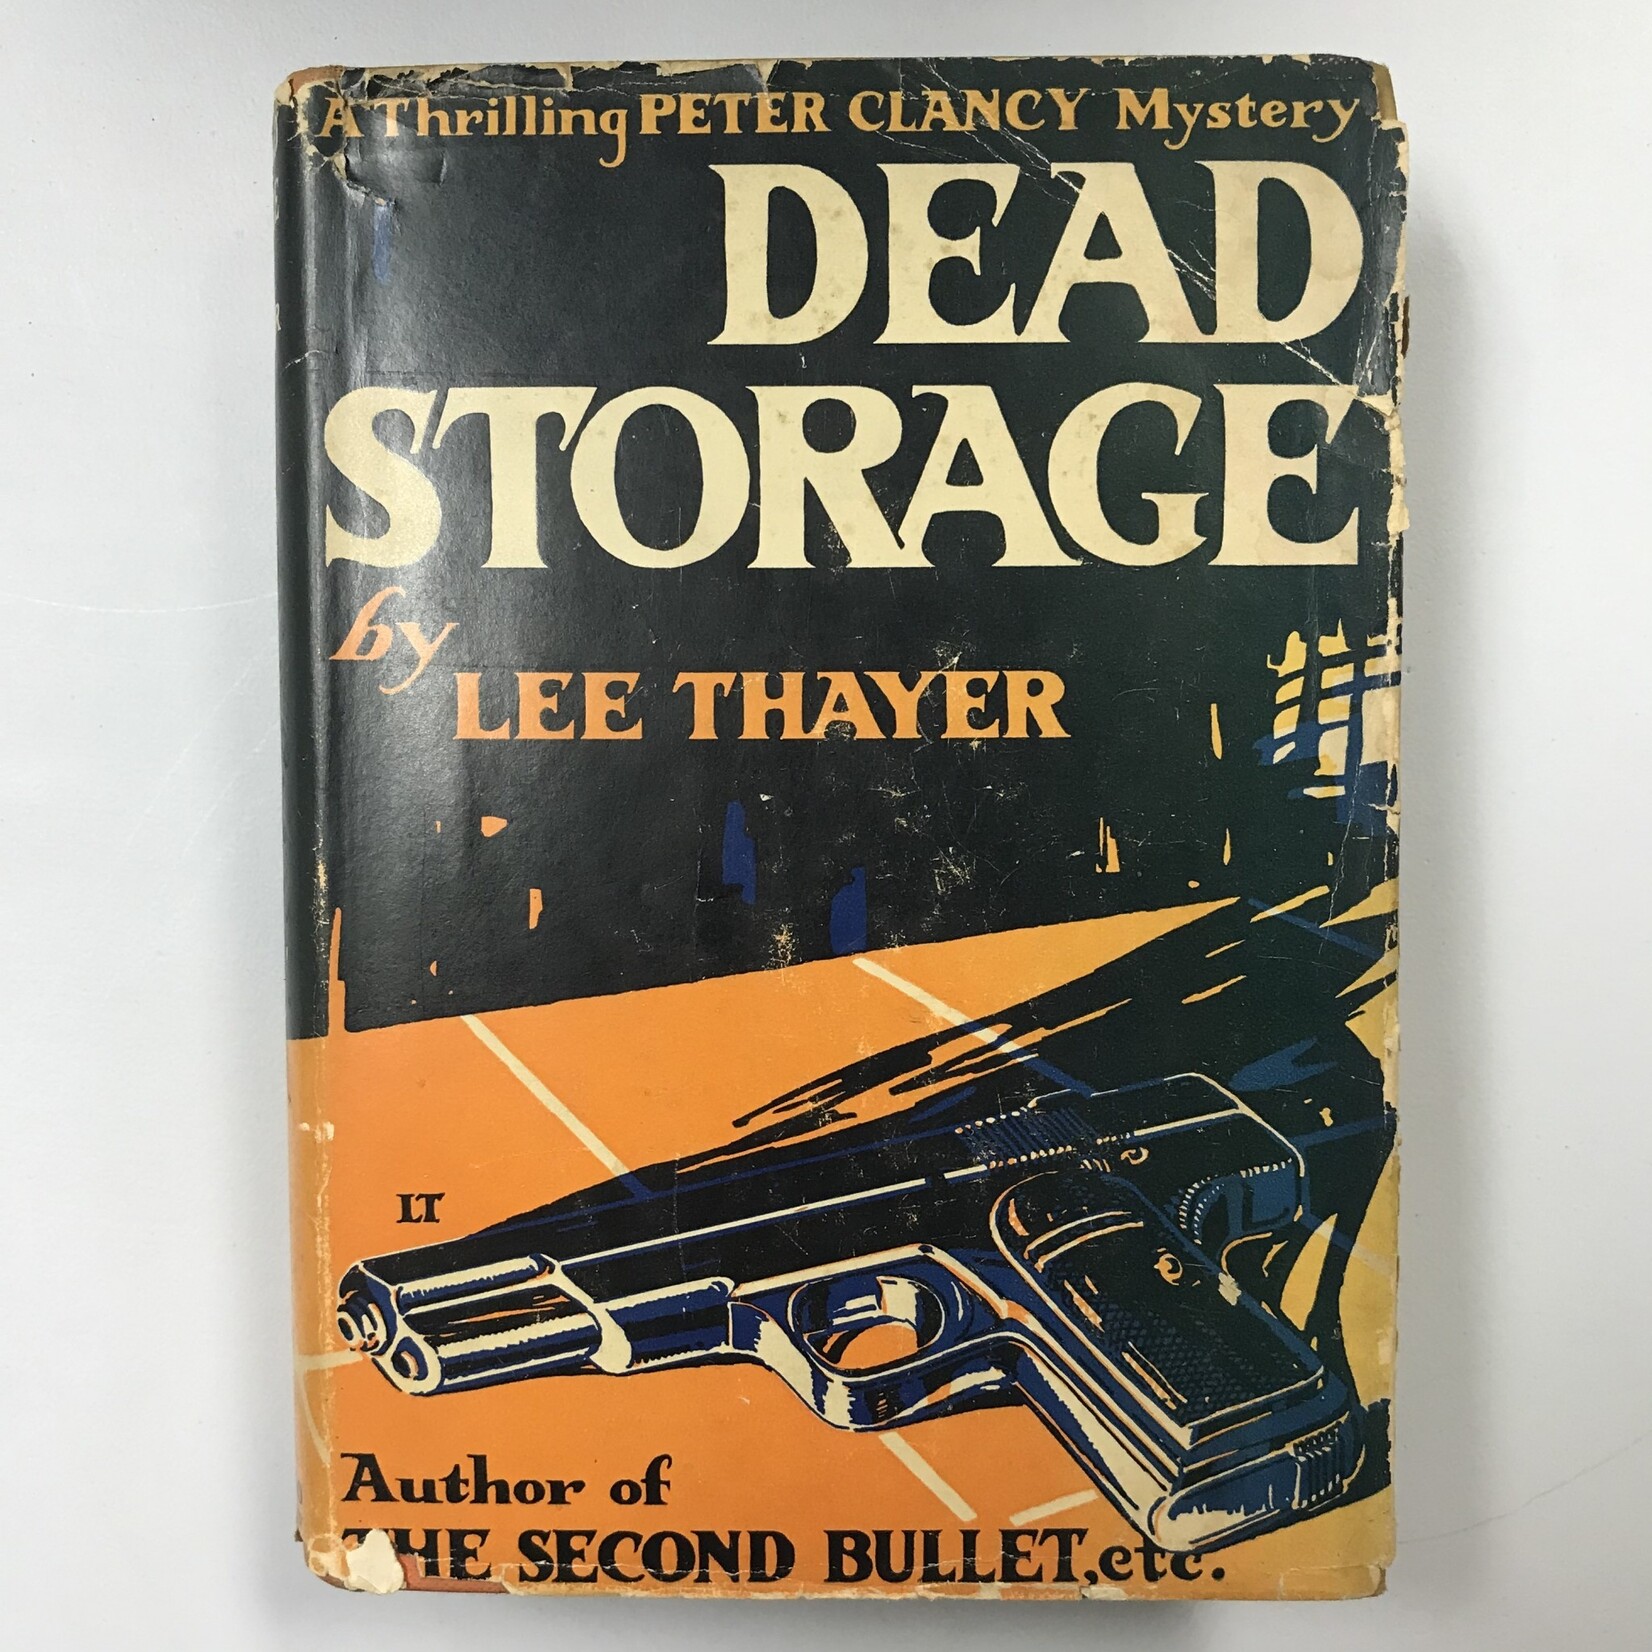 Lee Thayer - Dead Storage - Hardback (VINTAGE)